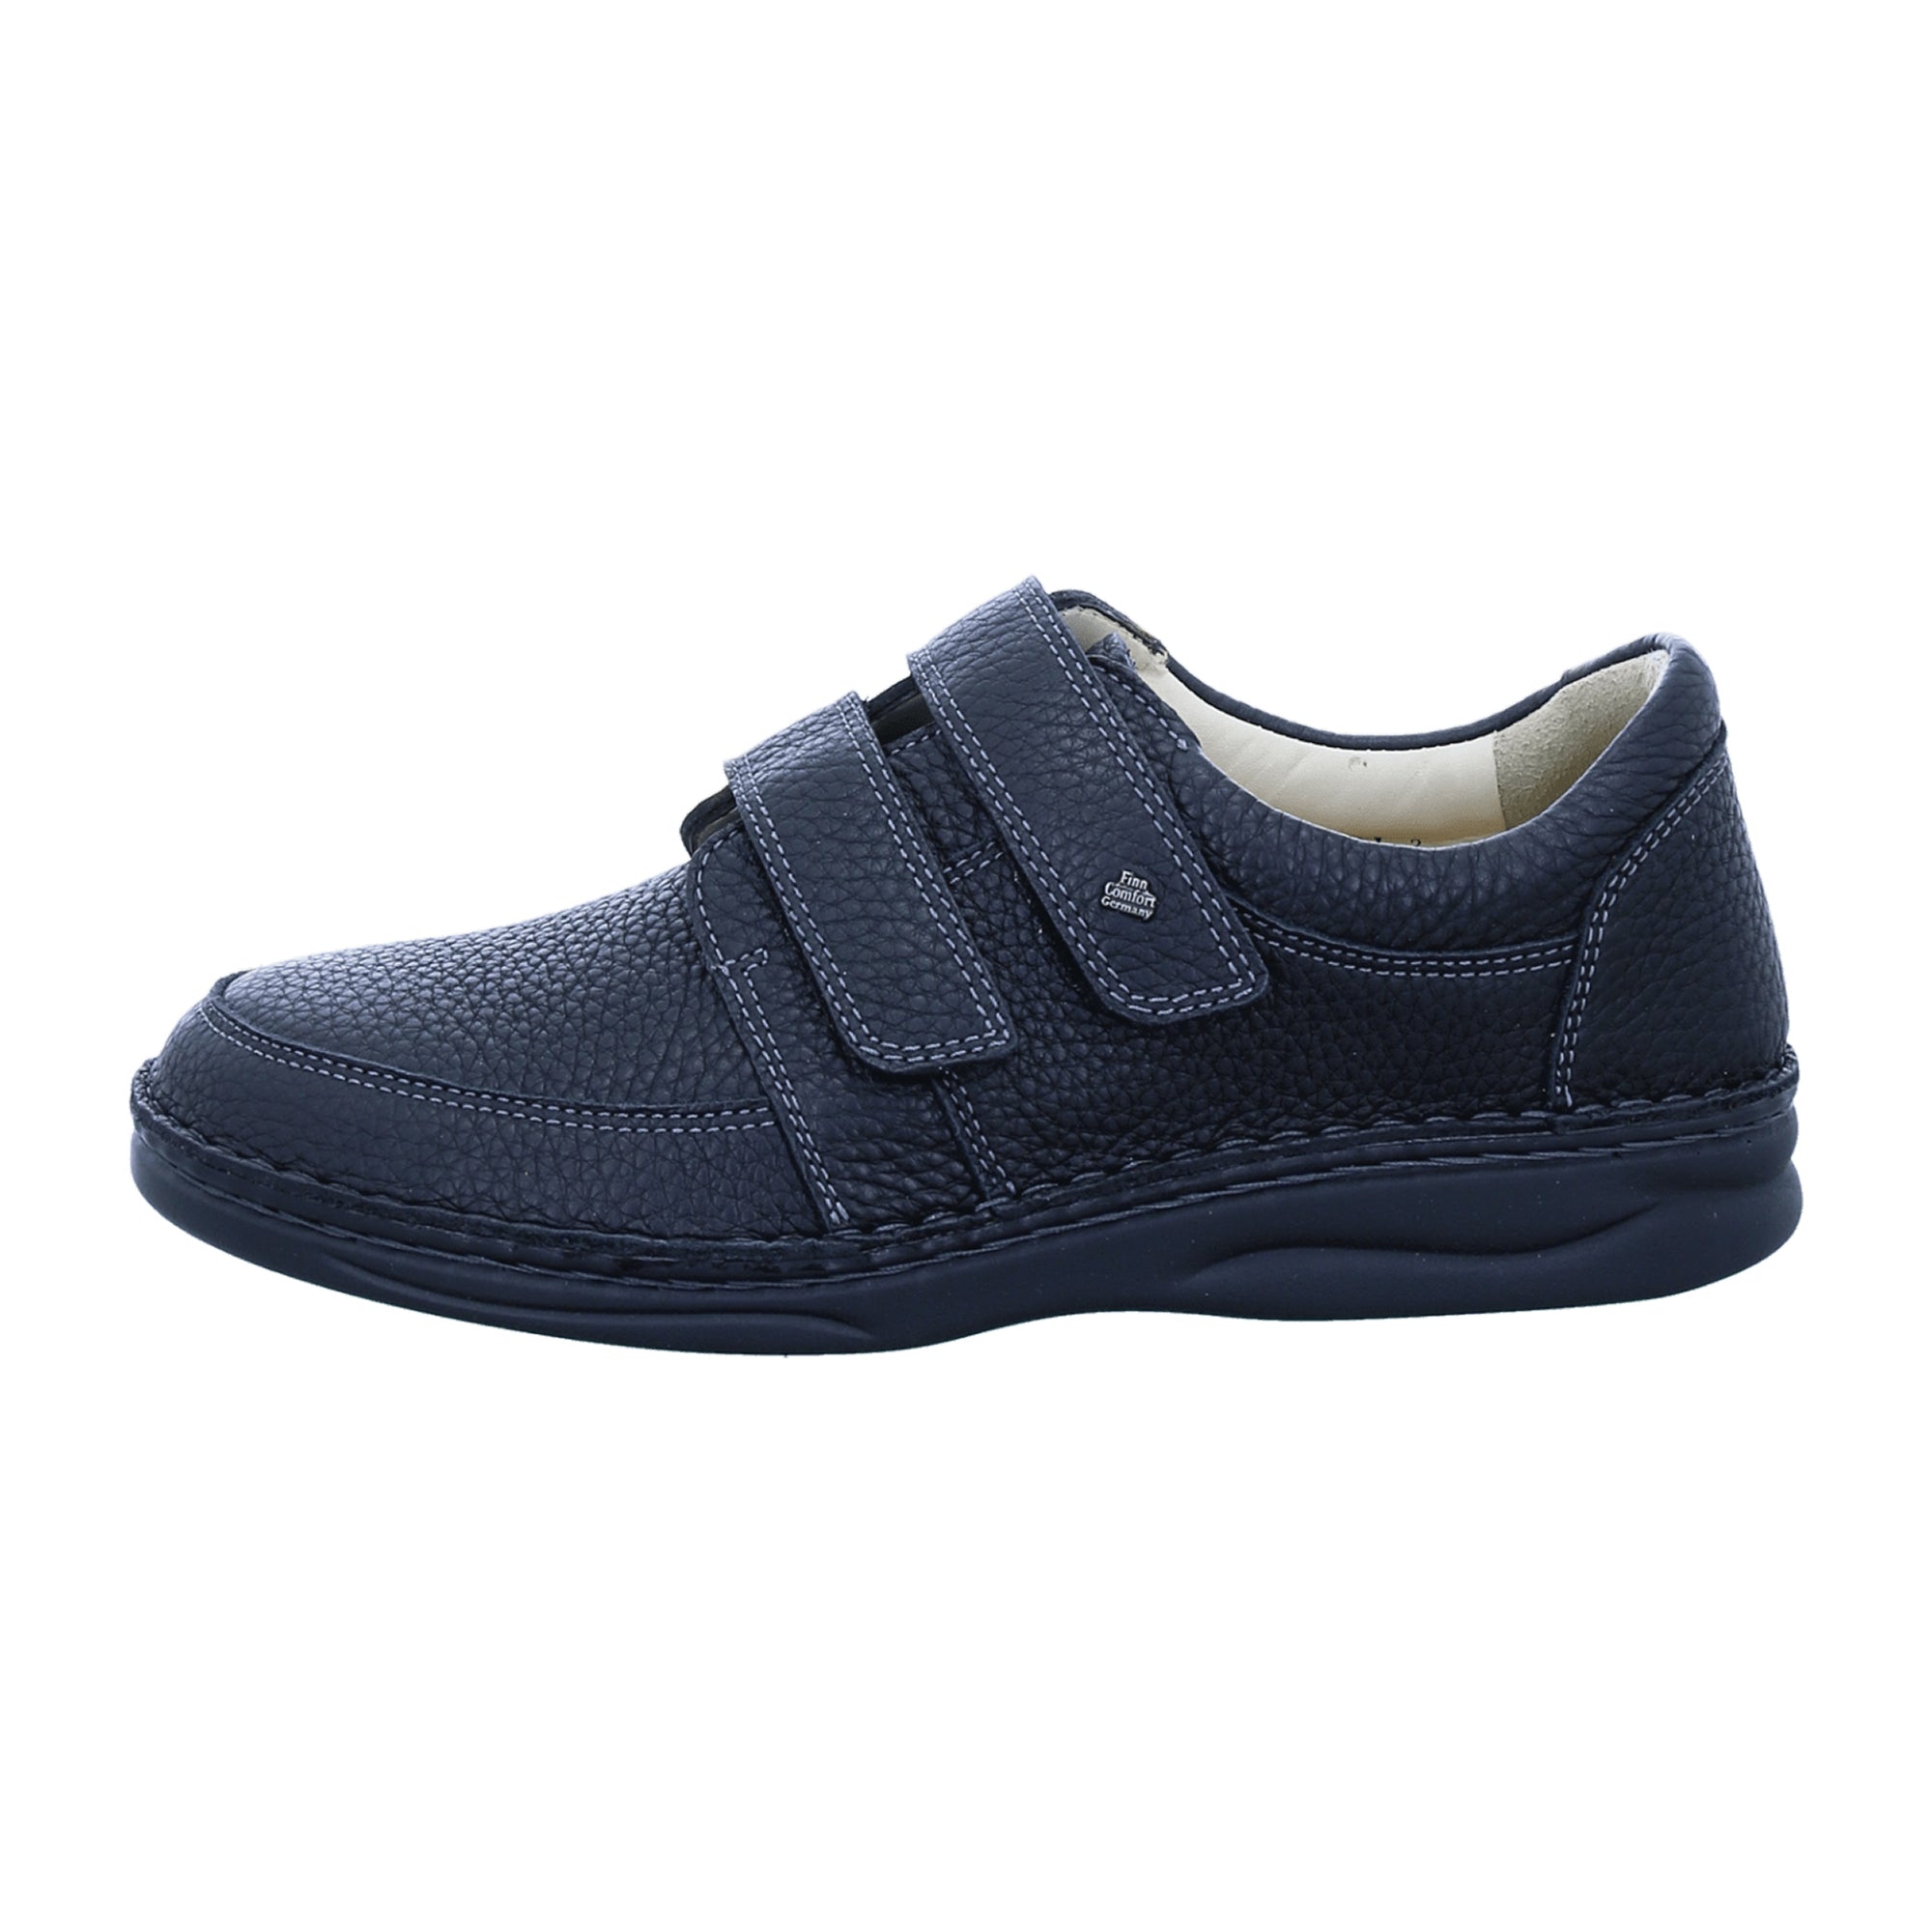 Finn Comfort Wicklow Men's Shoes 01112-650099 in Black - Stylish & Durable